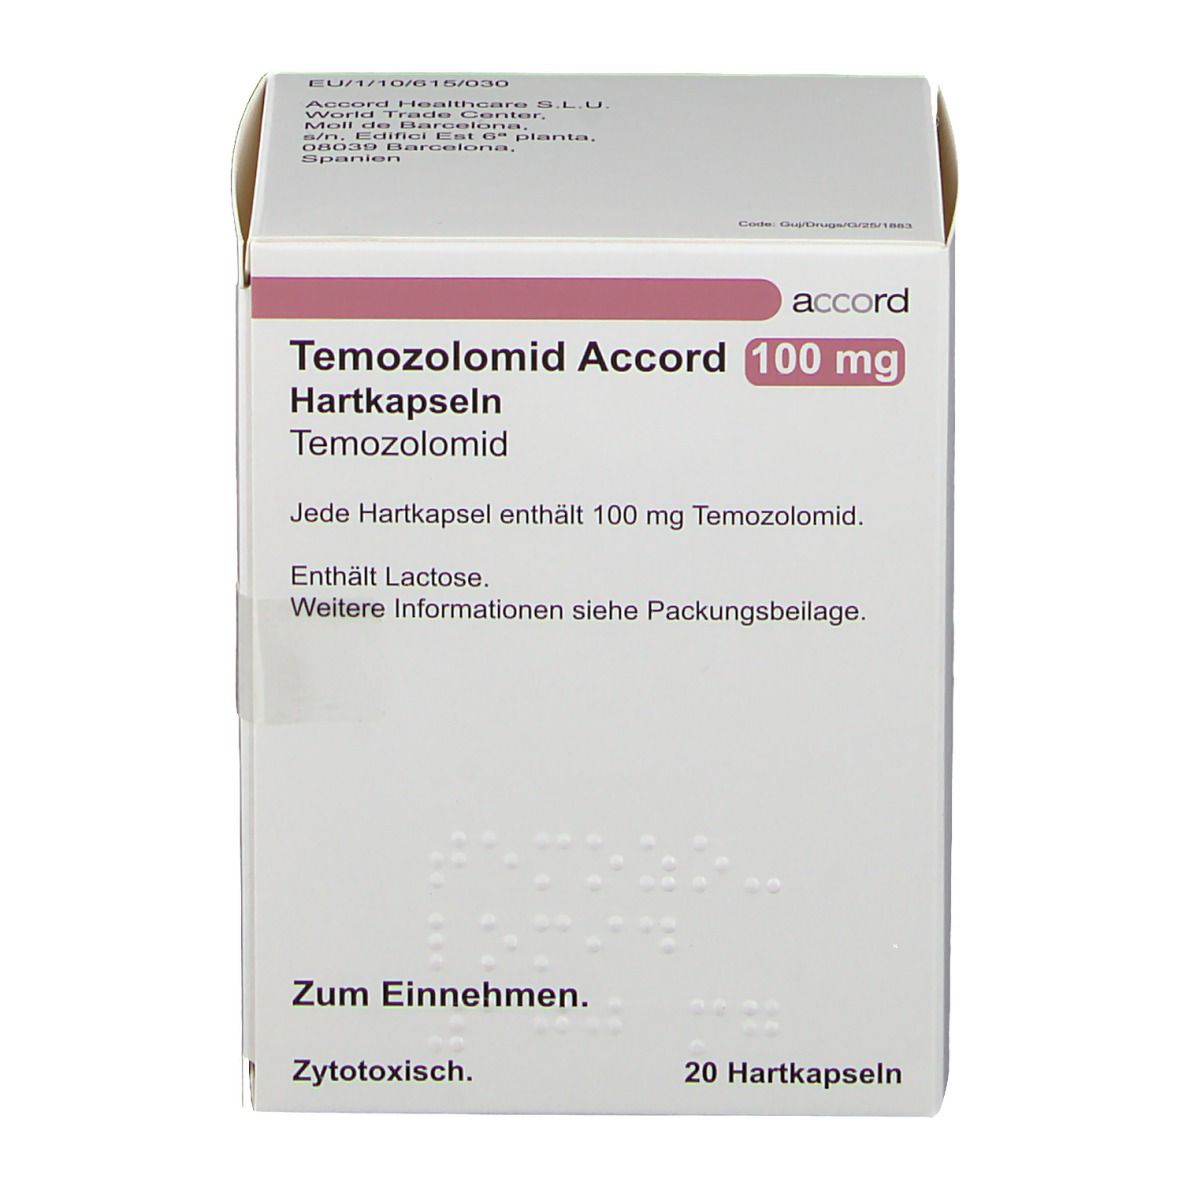 Temozolomid Accord 100 mg